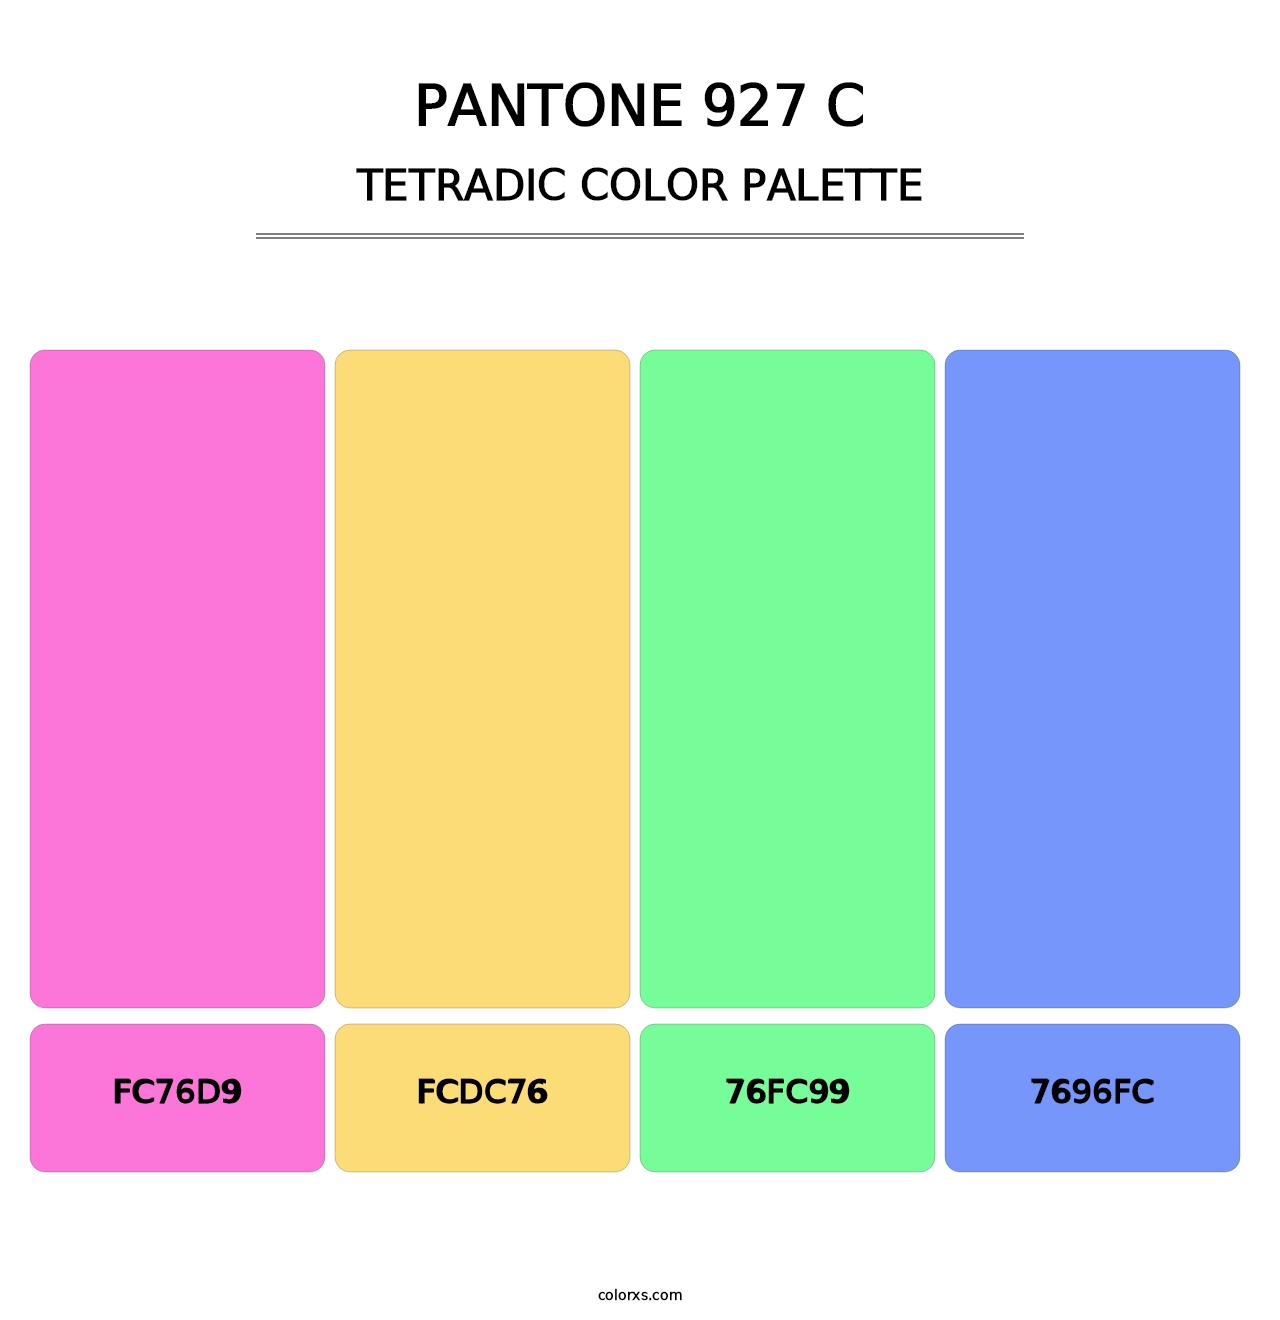 PANTONE 927 C - Tetradic Color Palette